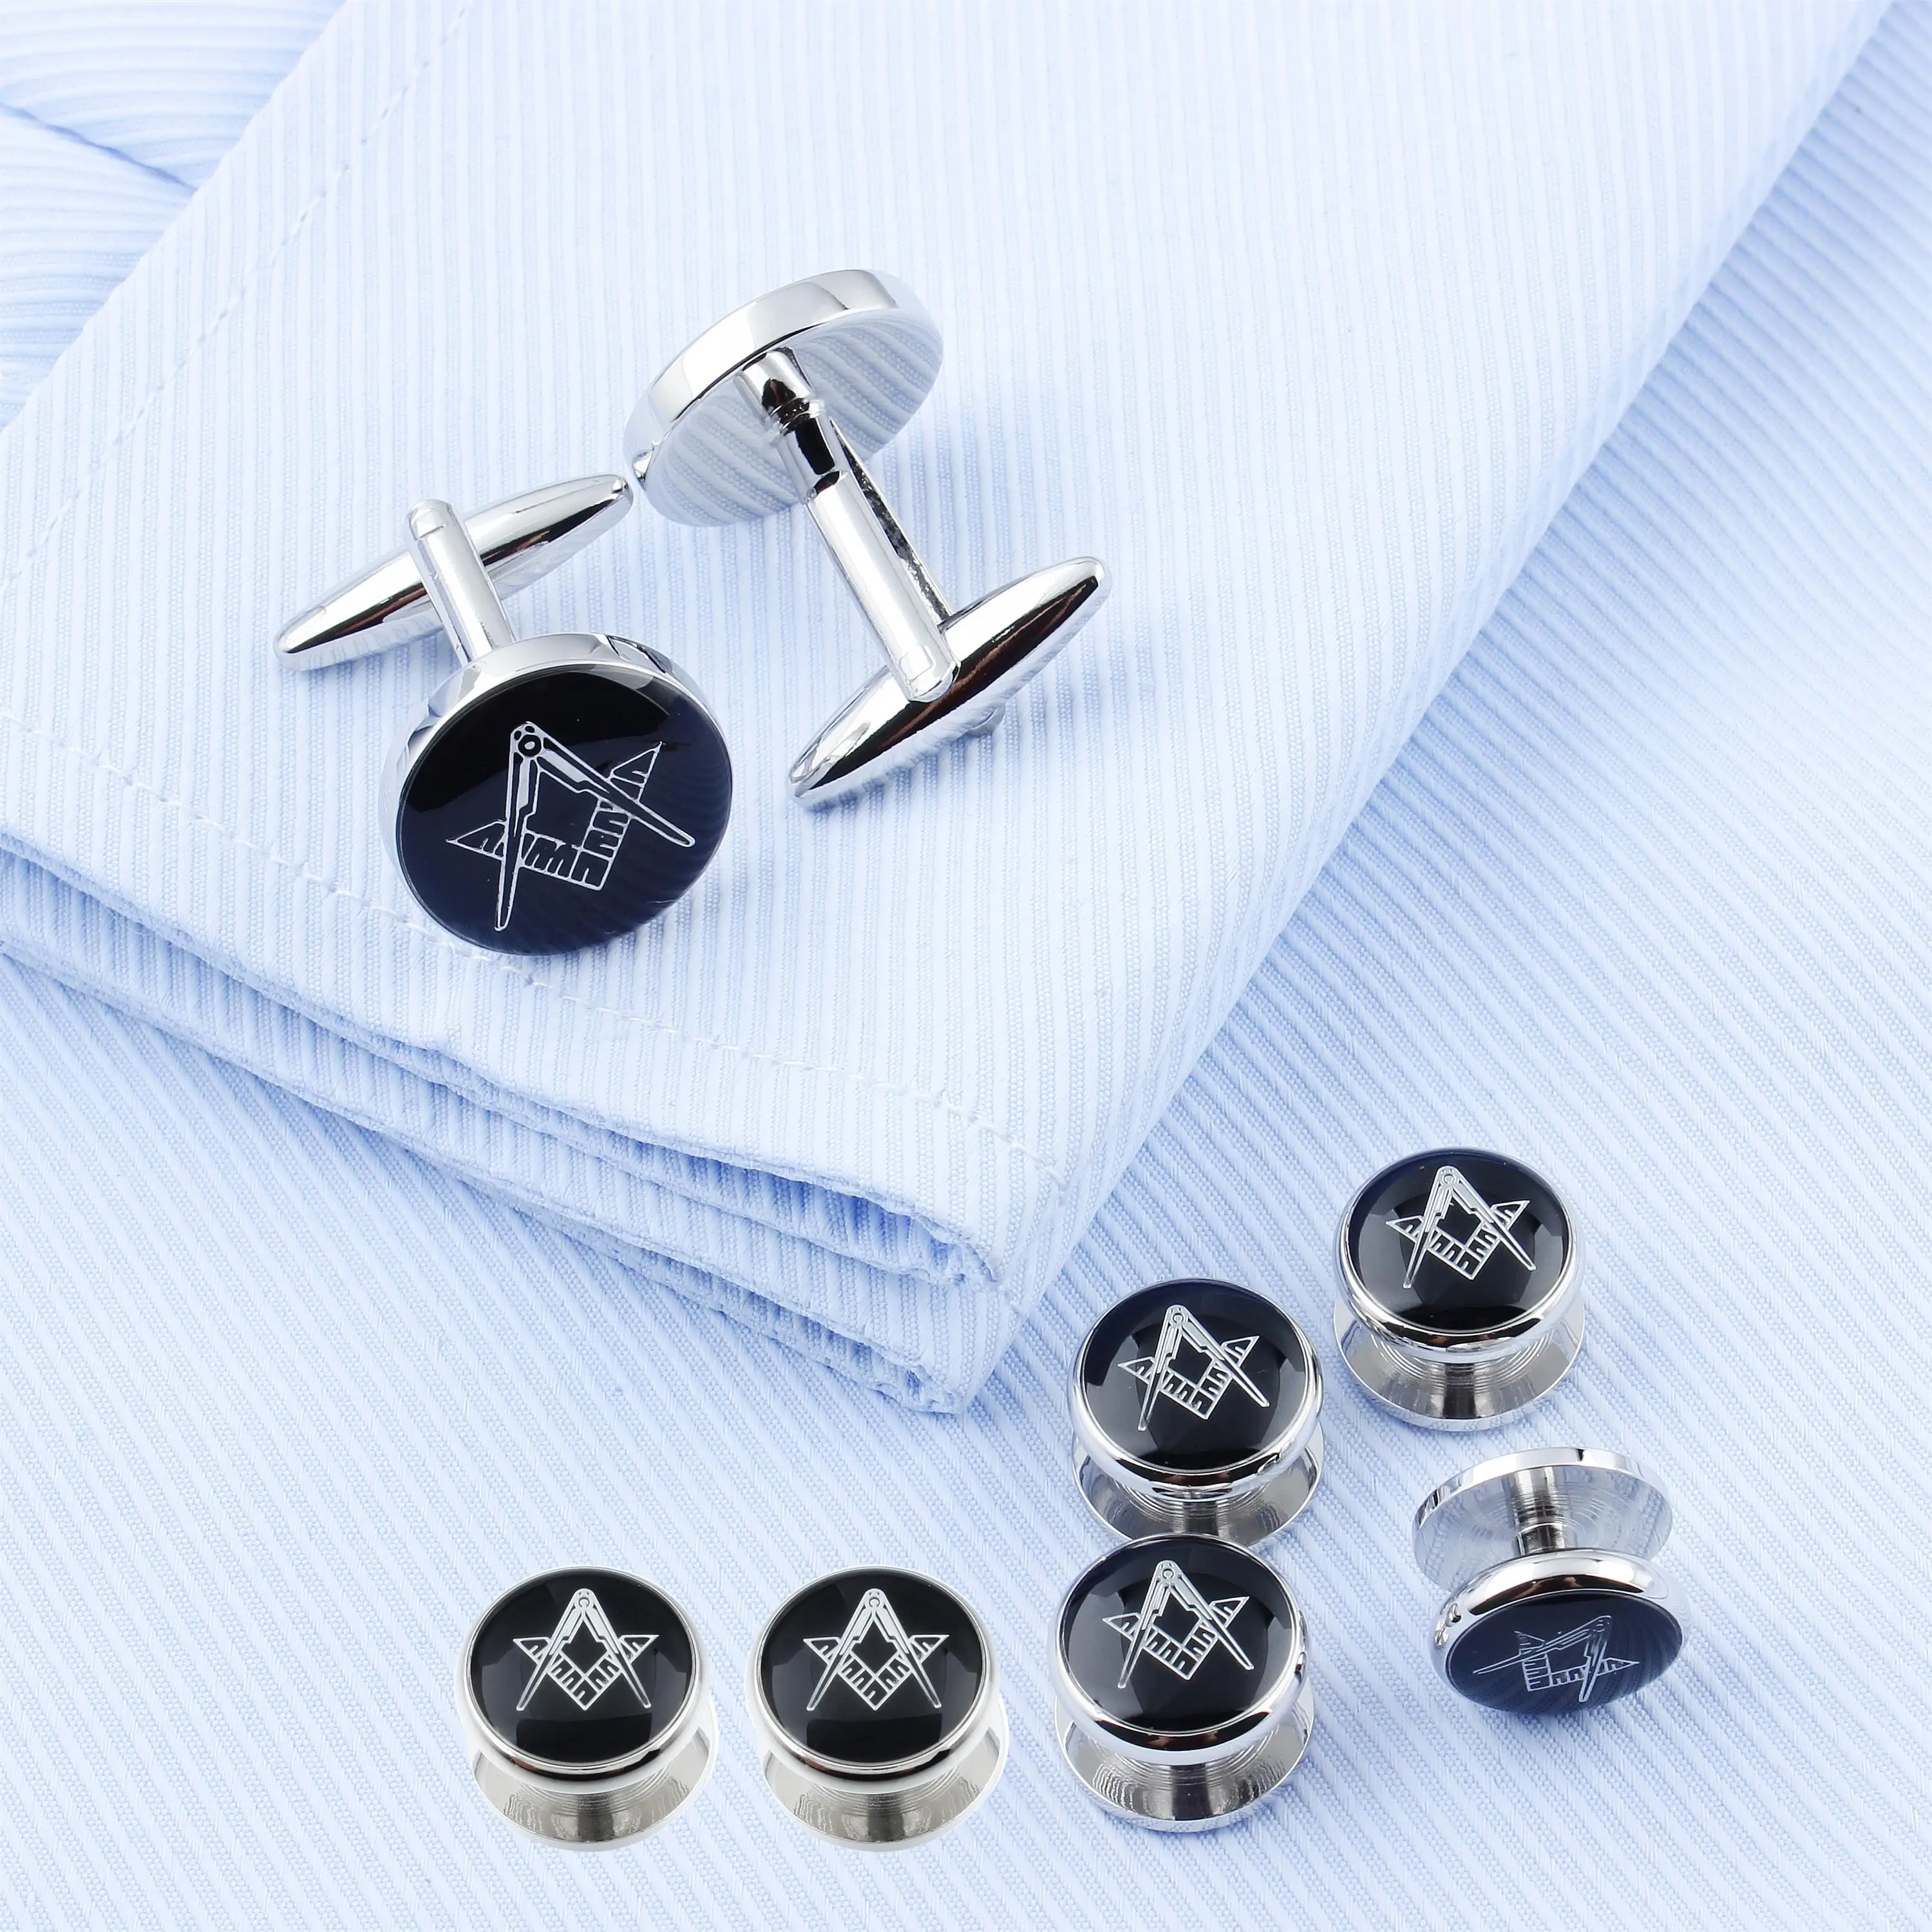 Freemason Masonic Cufflinks and Tuxedo Studs Set for Men, Gift Box Packed, Mens Jewelry or Accessories, Masonic Gifts for Men.